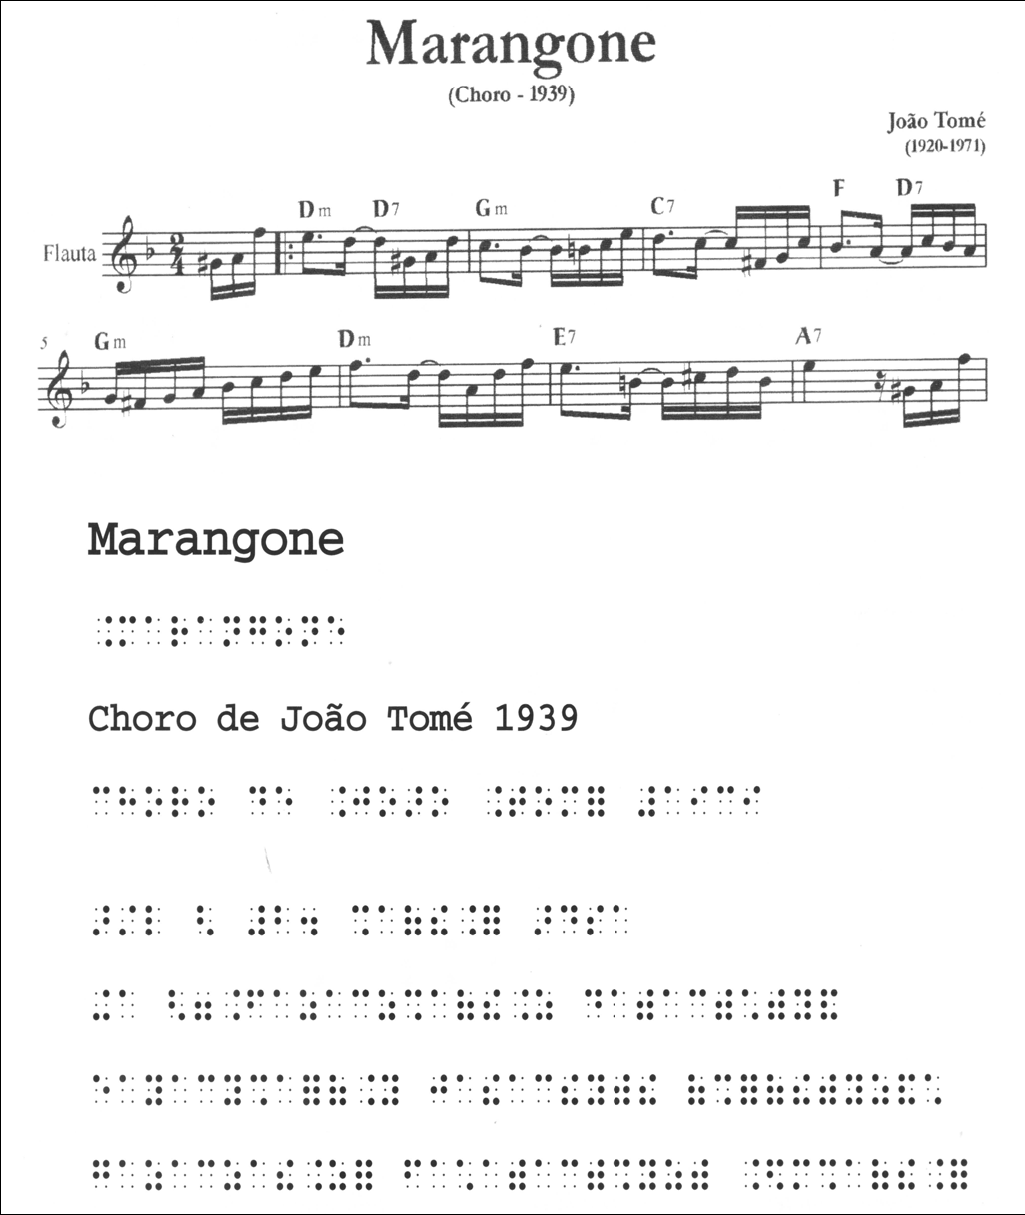 4. Trecho da partitura musical Marangone